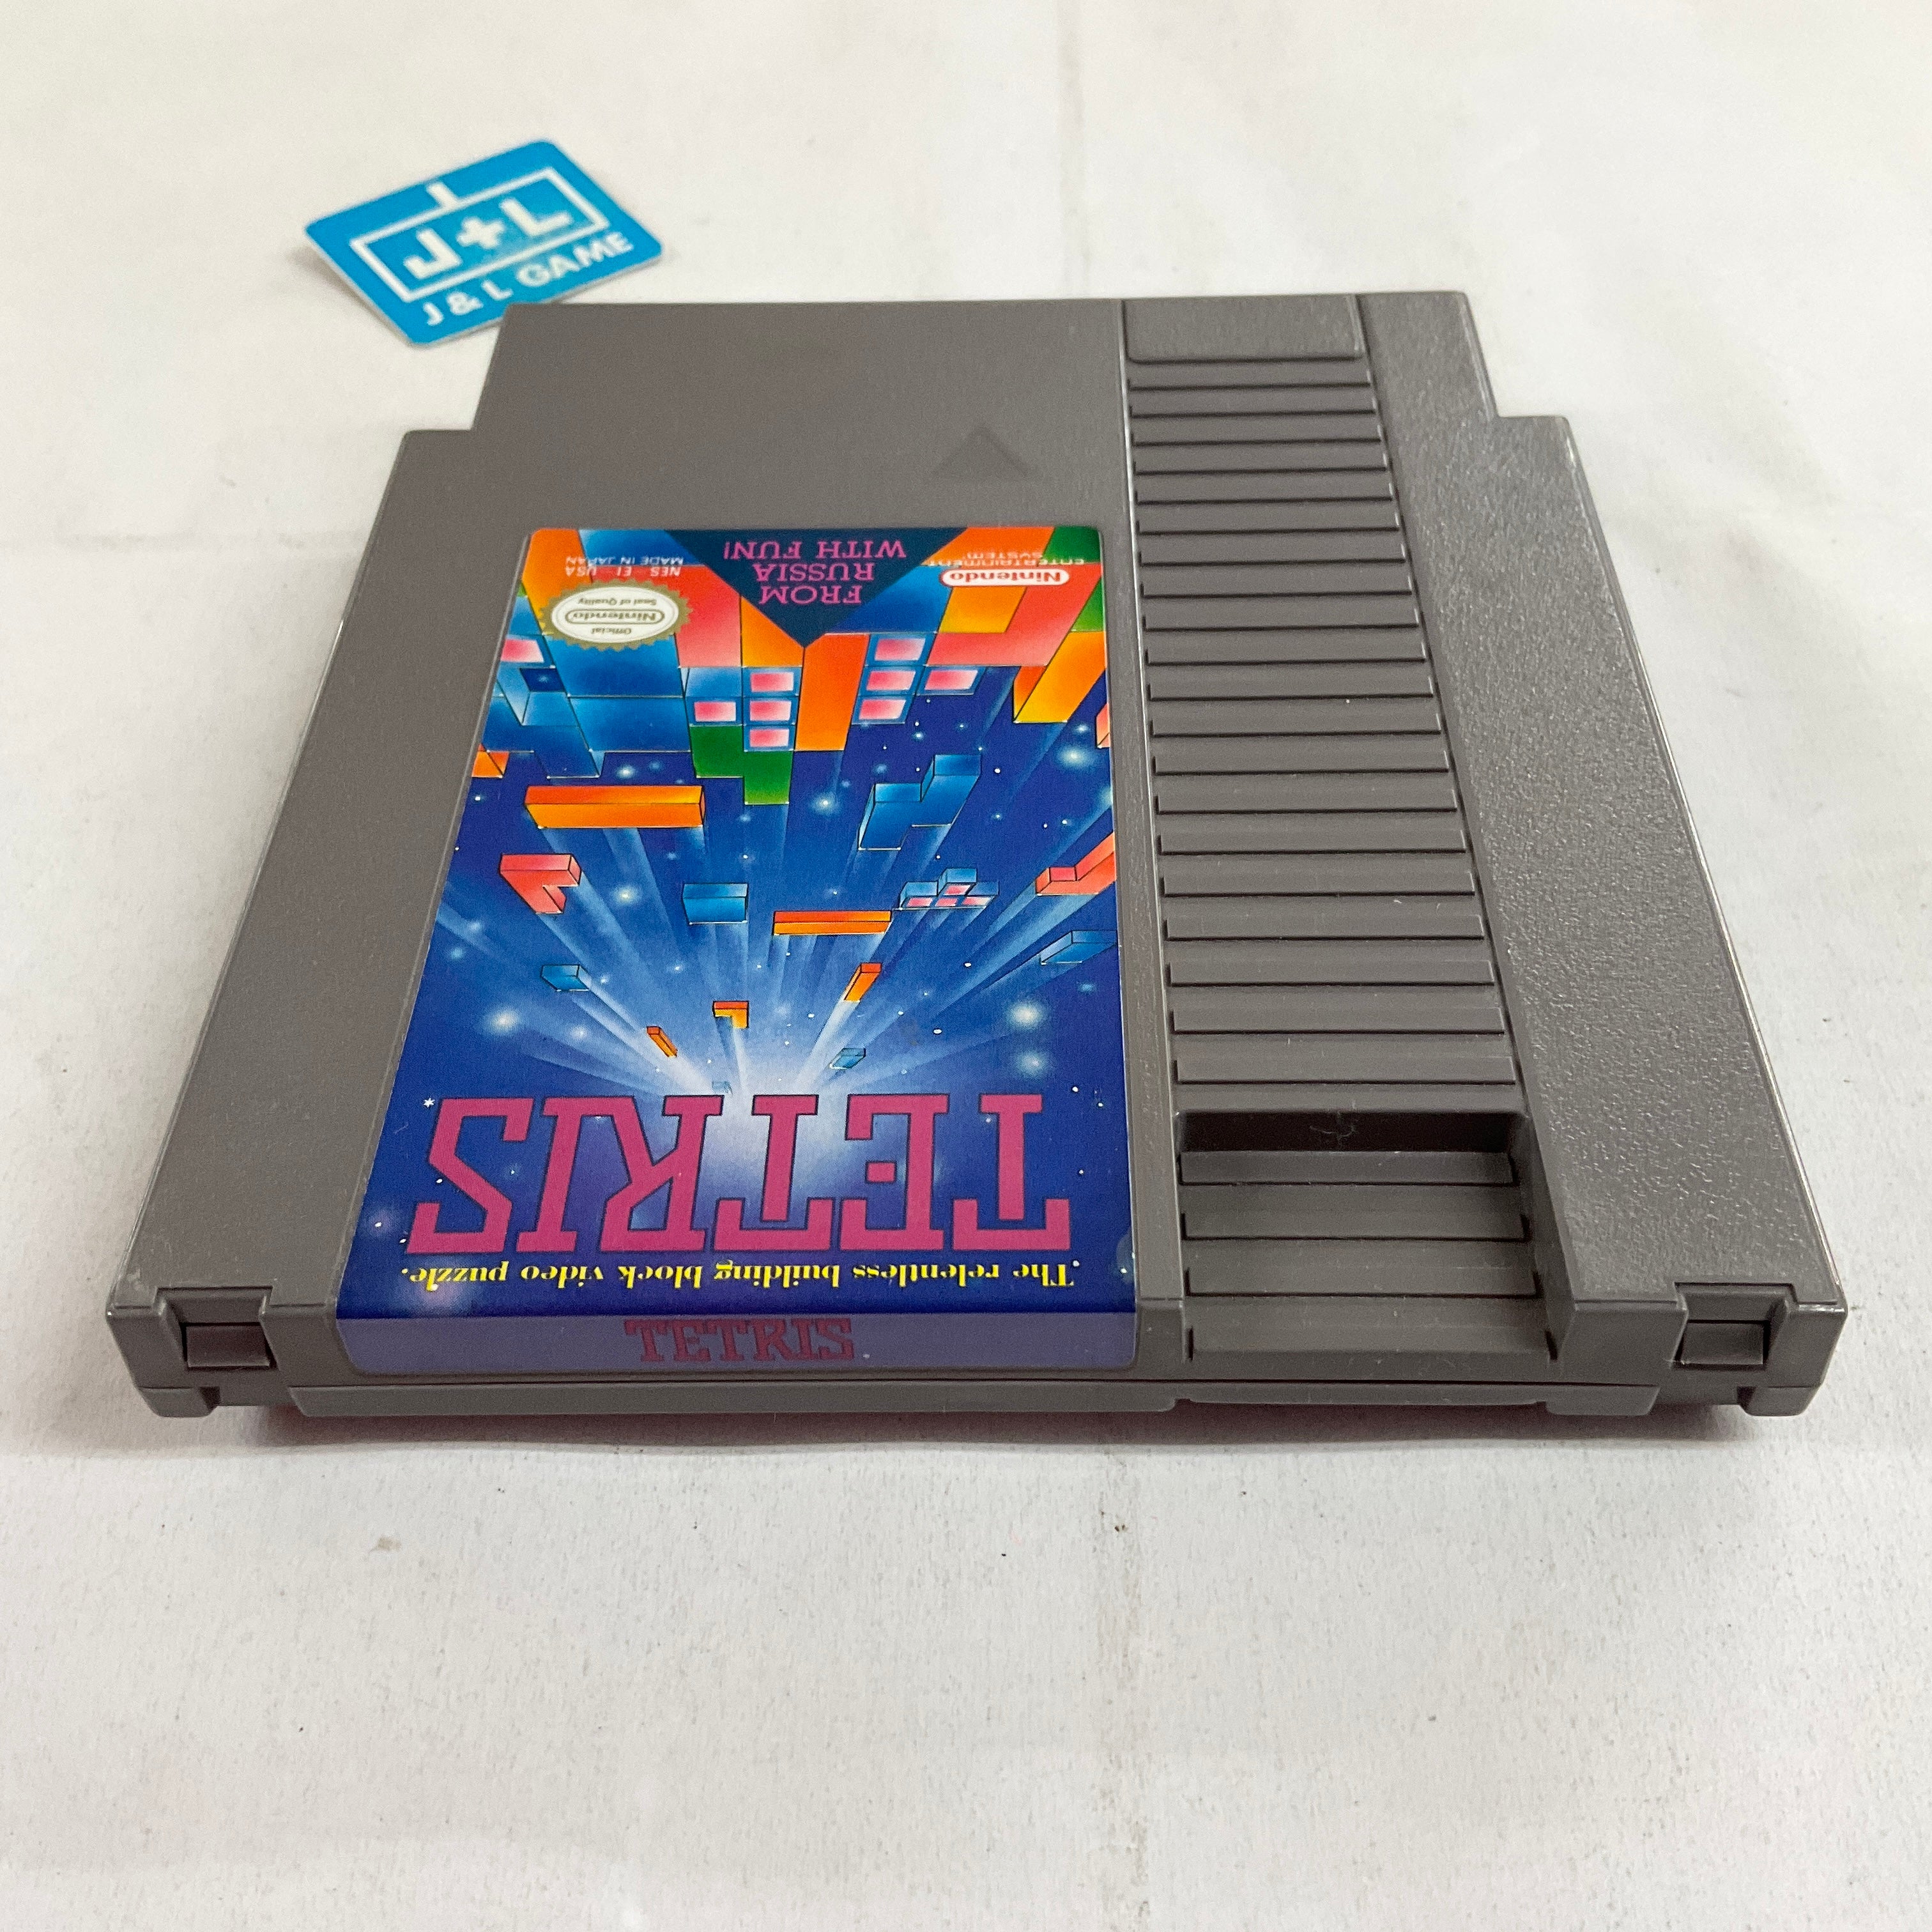 Tetris - (NES) Nintendo Entertainment System [Pre-Owned] Video Games Nintendo   